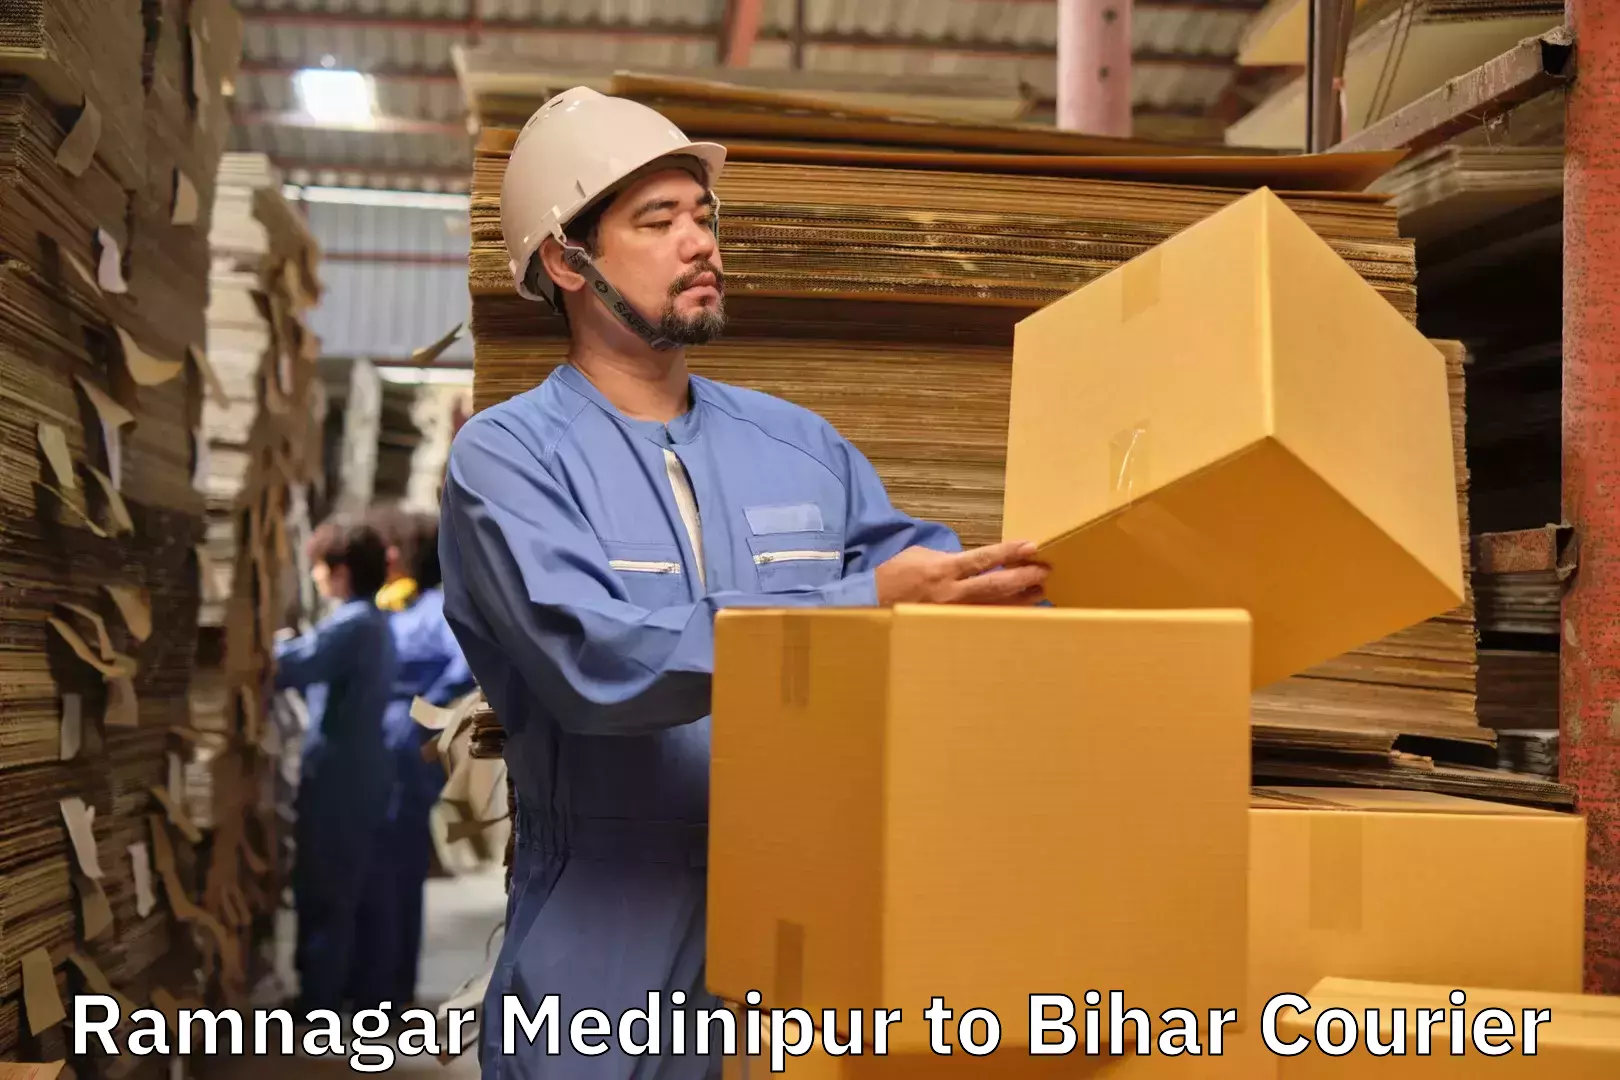 Baggage shipping service Ramnagar Medinipur to Sultanganj